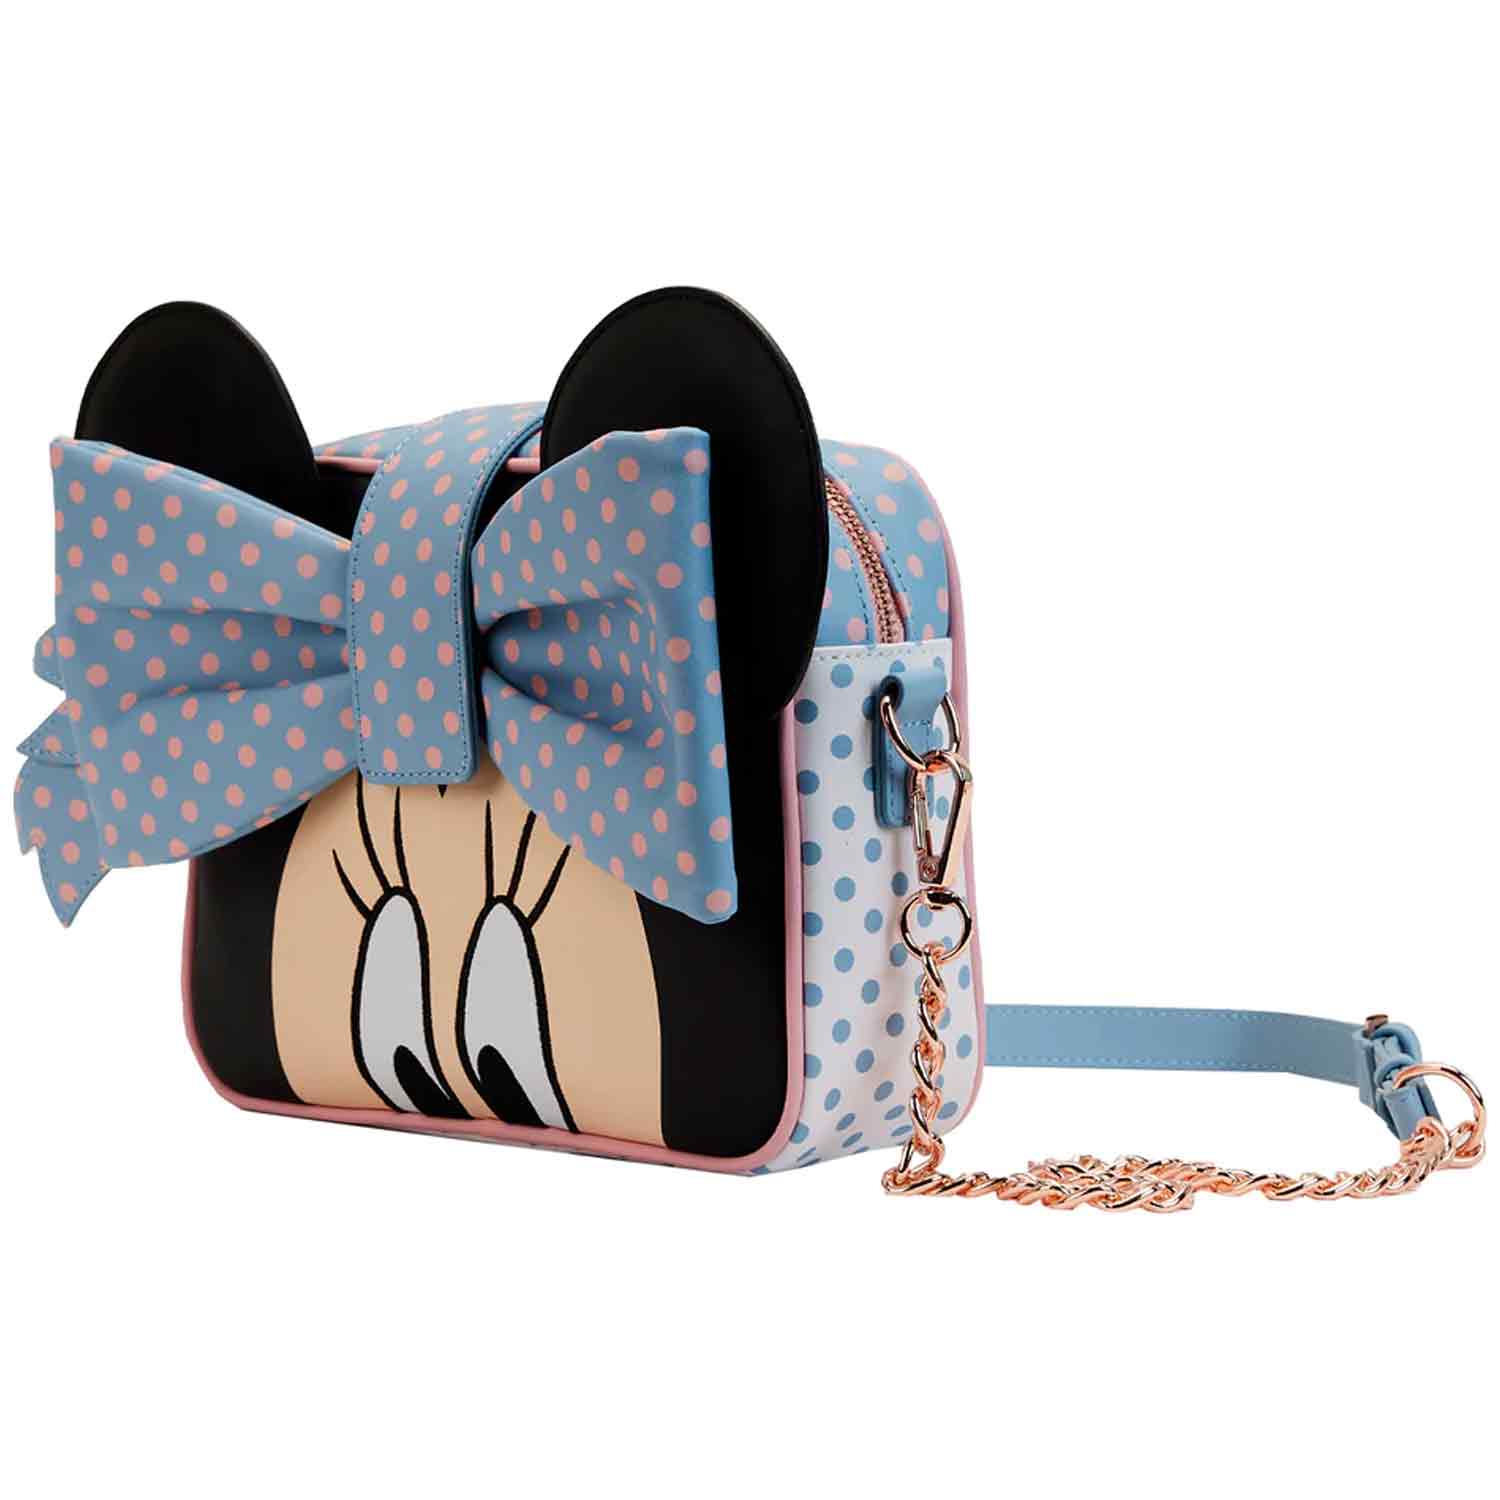 Loungefly x Disney Minnie Mouse Pastel Polka Dot Crossbody Bag - GeekCore